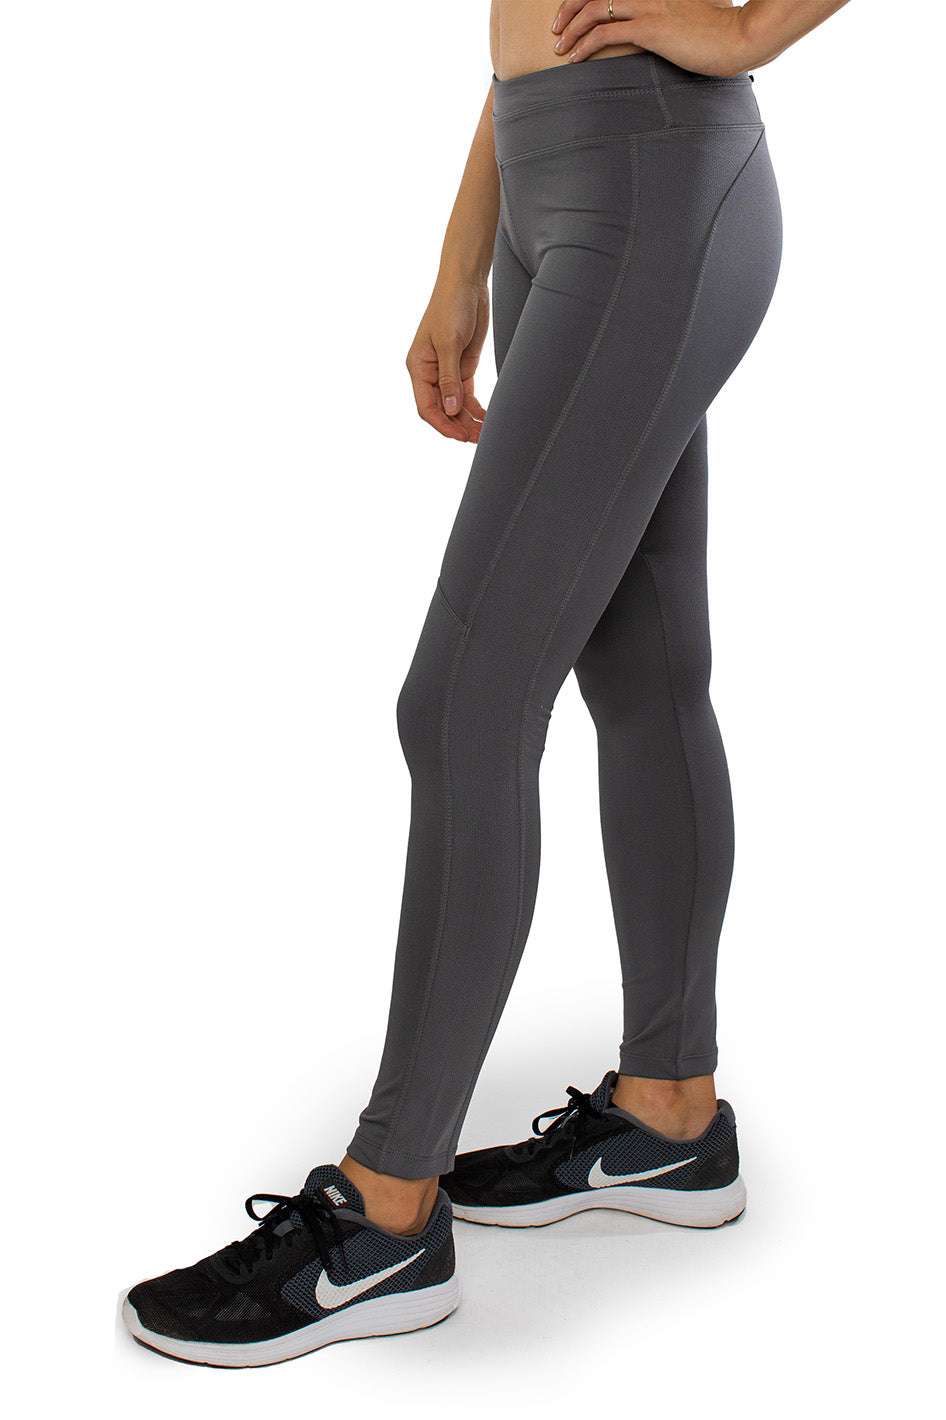 Avia Leggings Workout Active Size XXXL (22)  Workout leggings with pockets,  Capri leggings workout, High waisted leggings workout